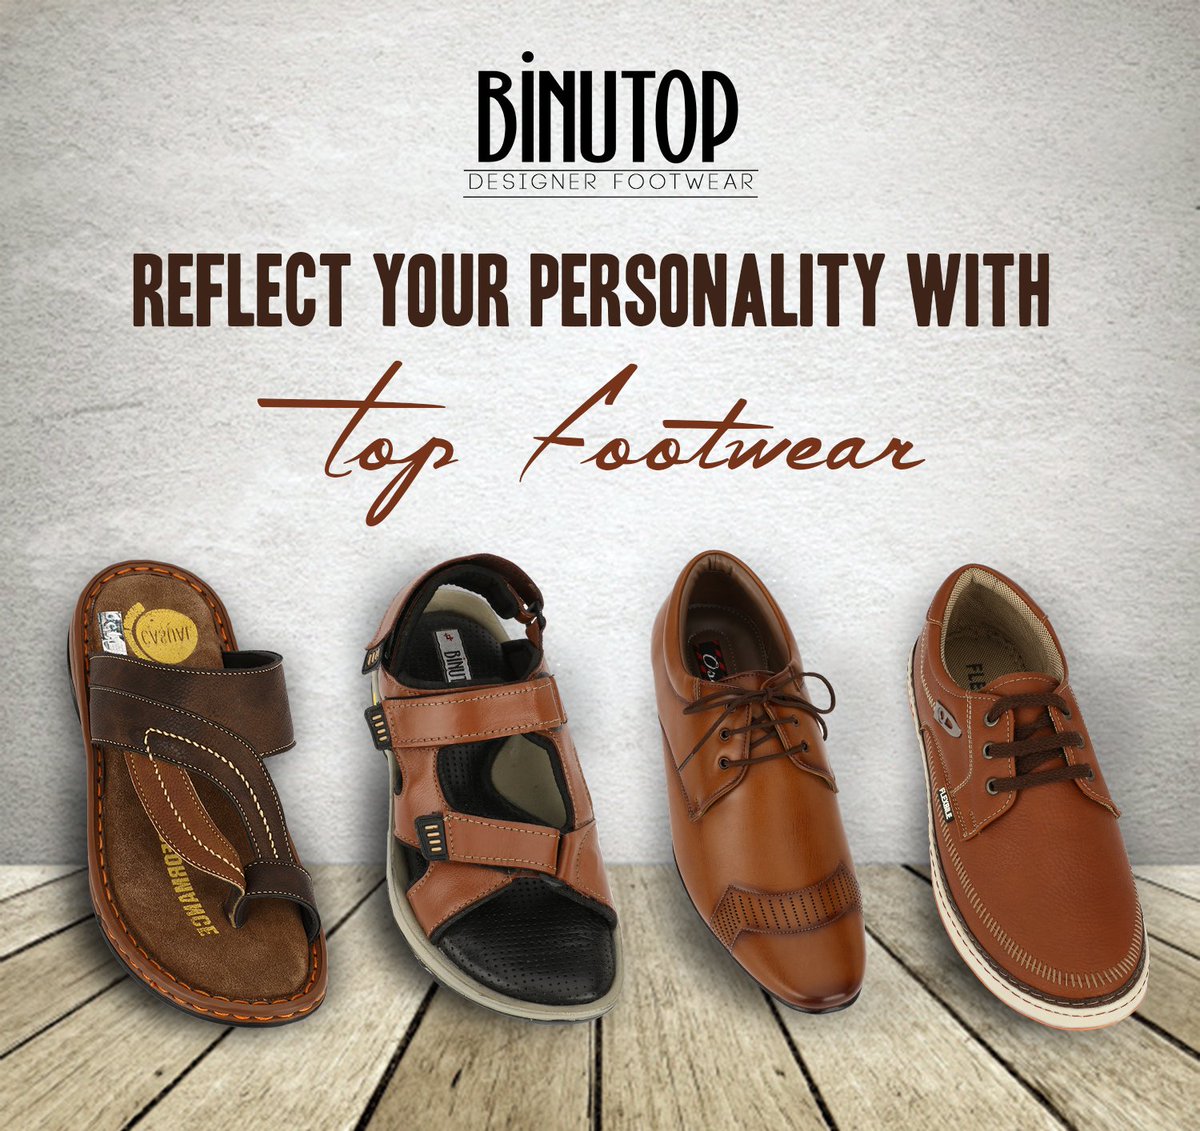 binutop formal shoes